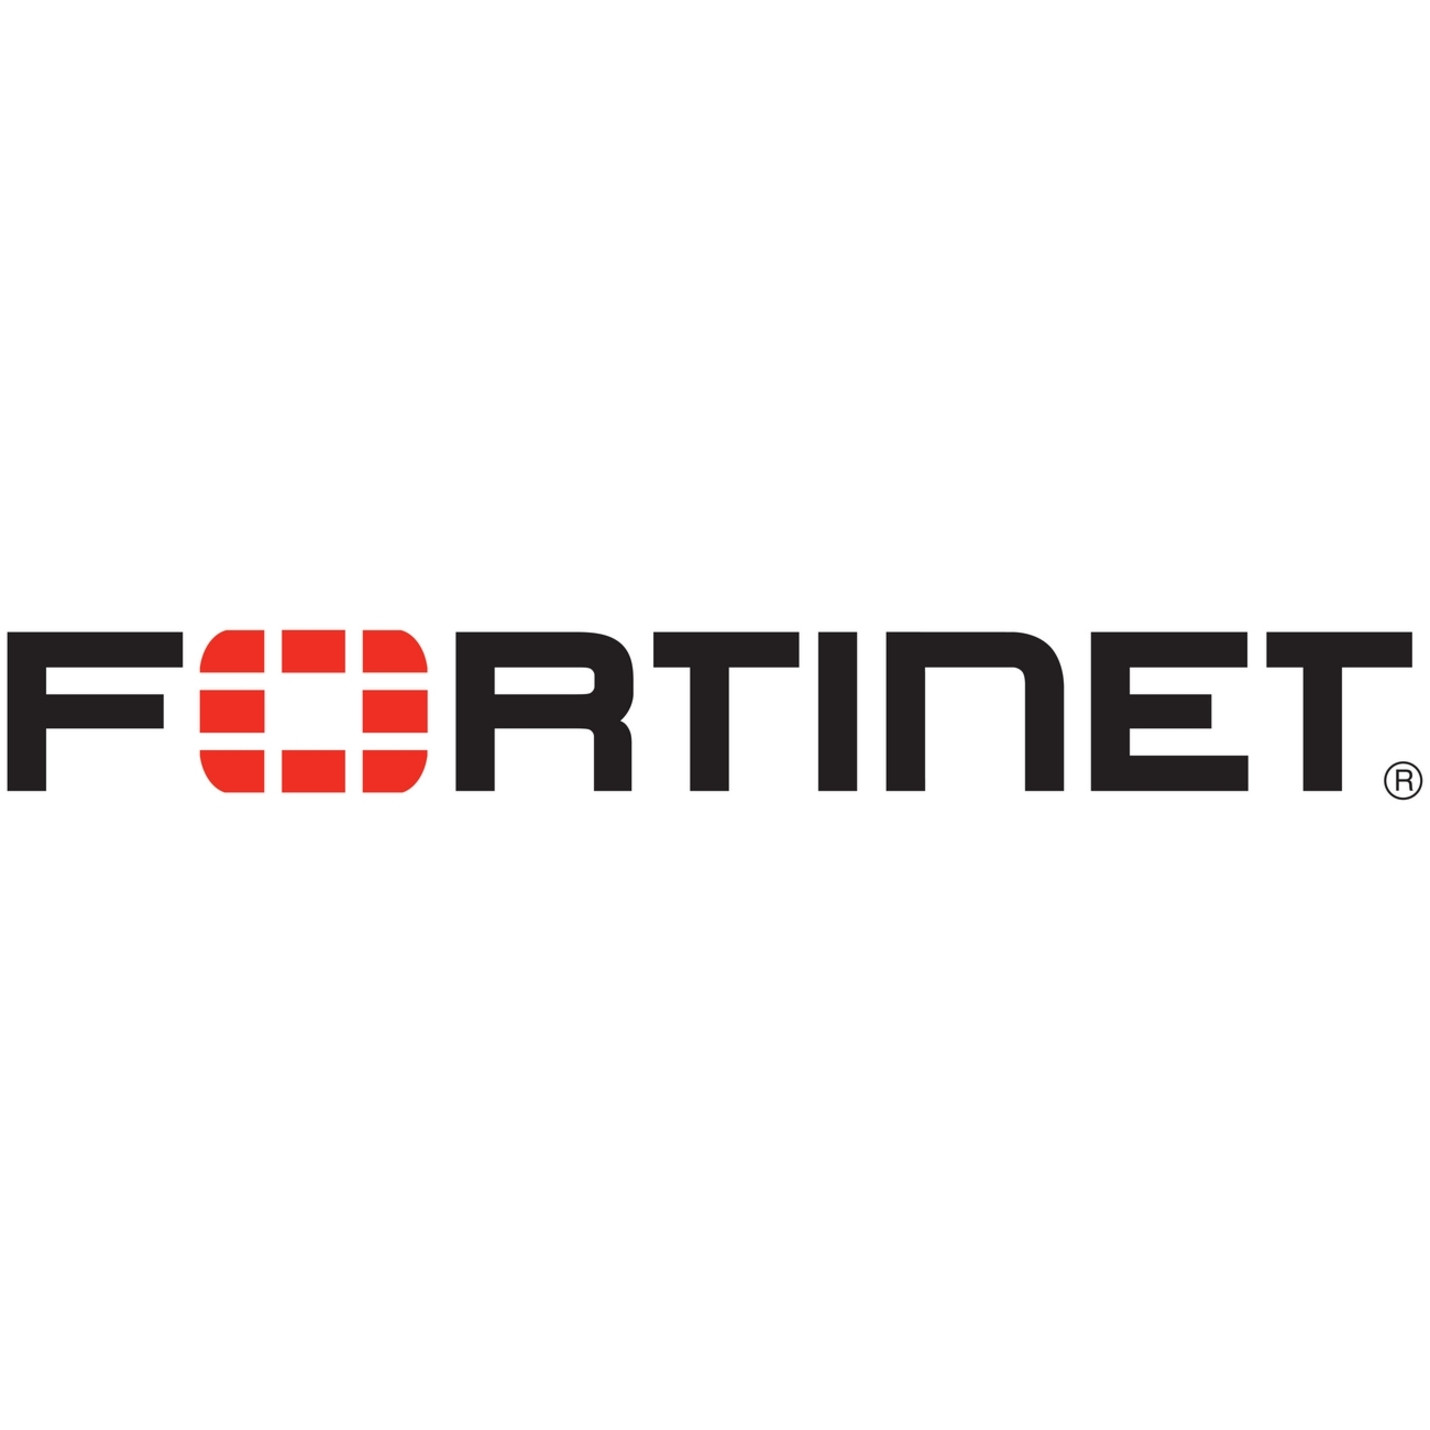 Fortinet Enterprise Bundle (FortiCare plus NGFW, AV, Web Filtering, Antispam, Botnet IP/Domain, FortiSandbox Cloud and Mobile Secu… FC-10-0090E-974-0…